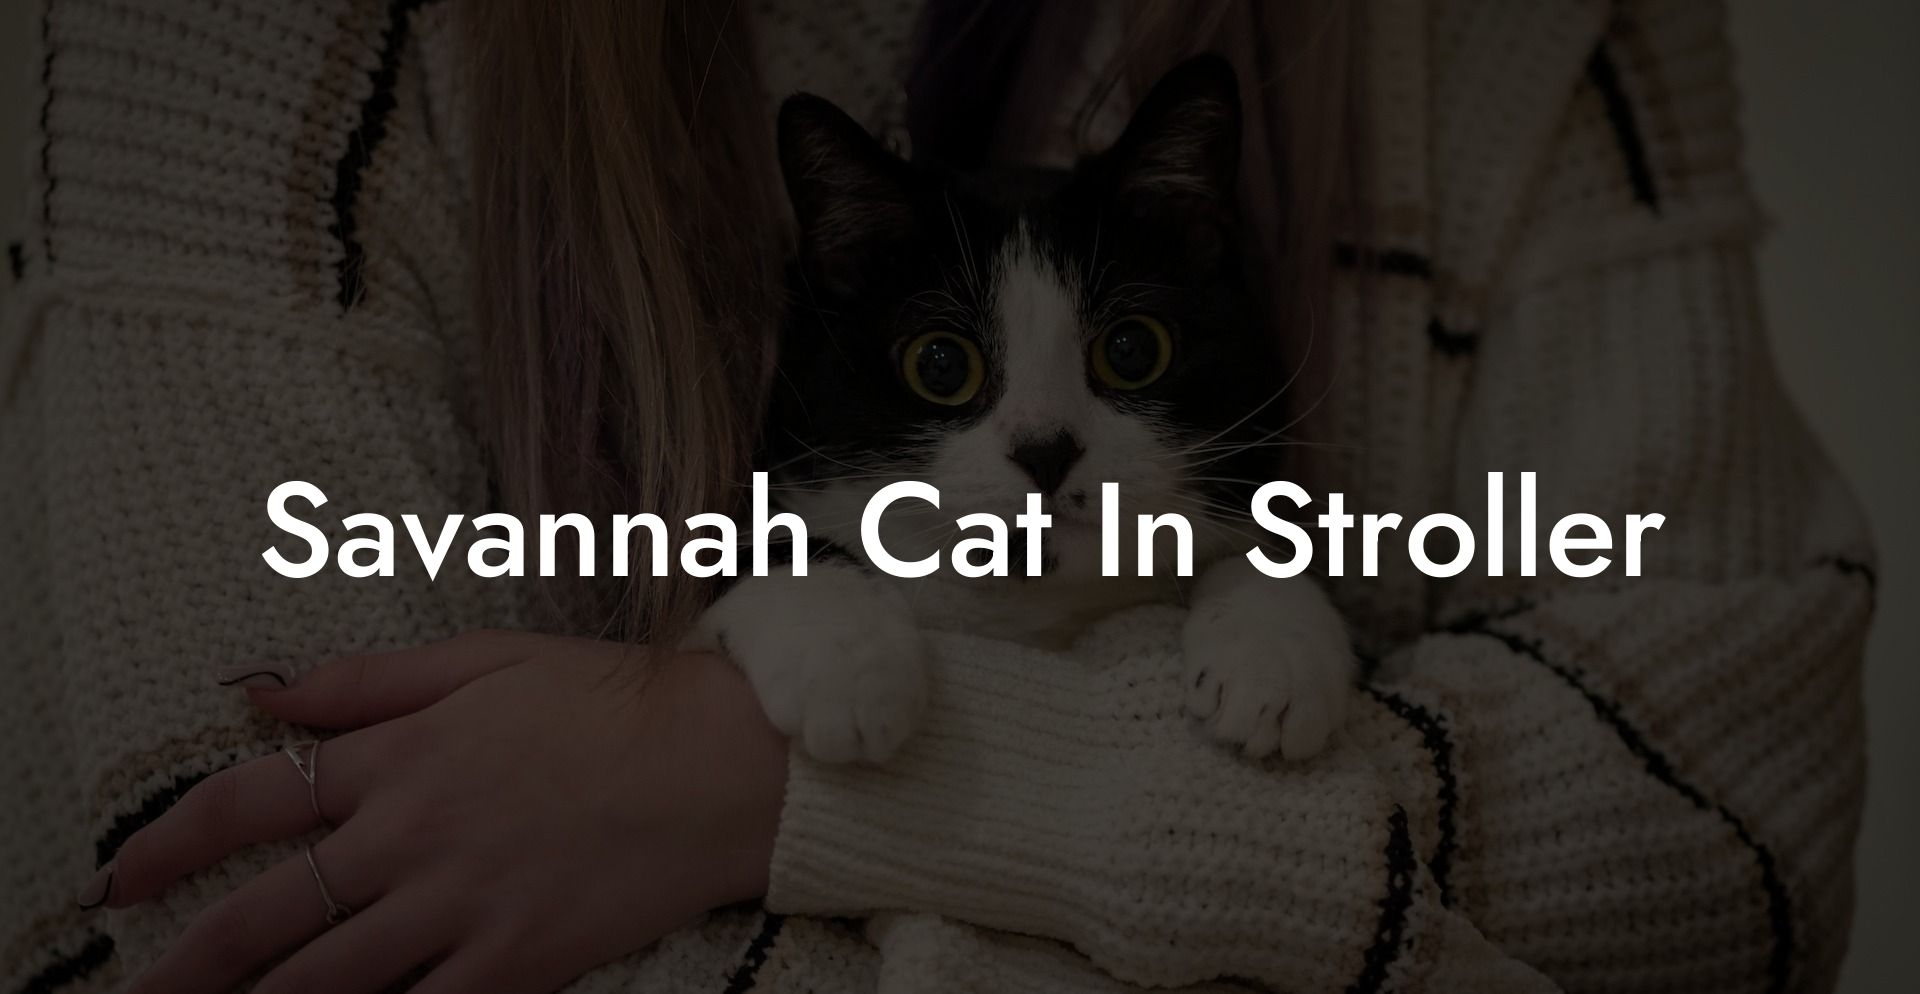 Savannah Cat In Stroller